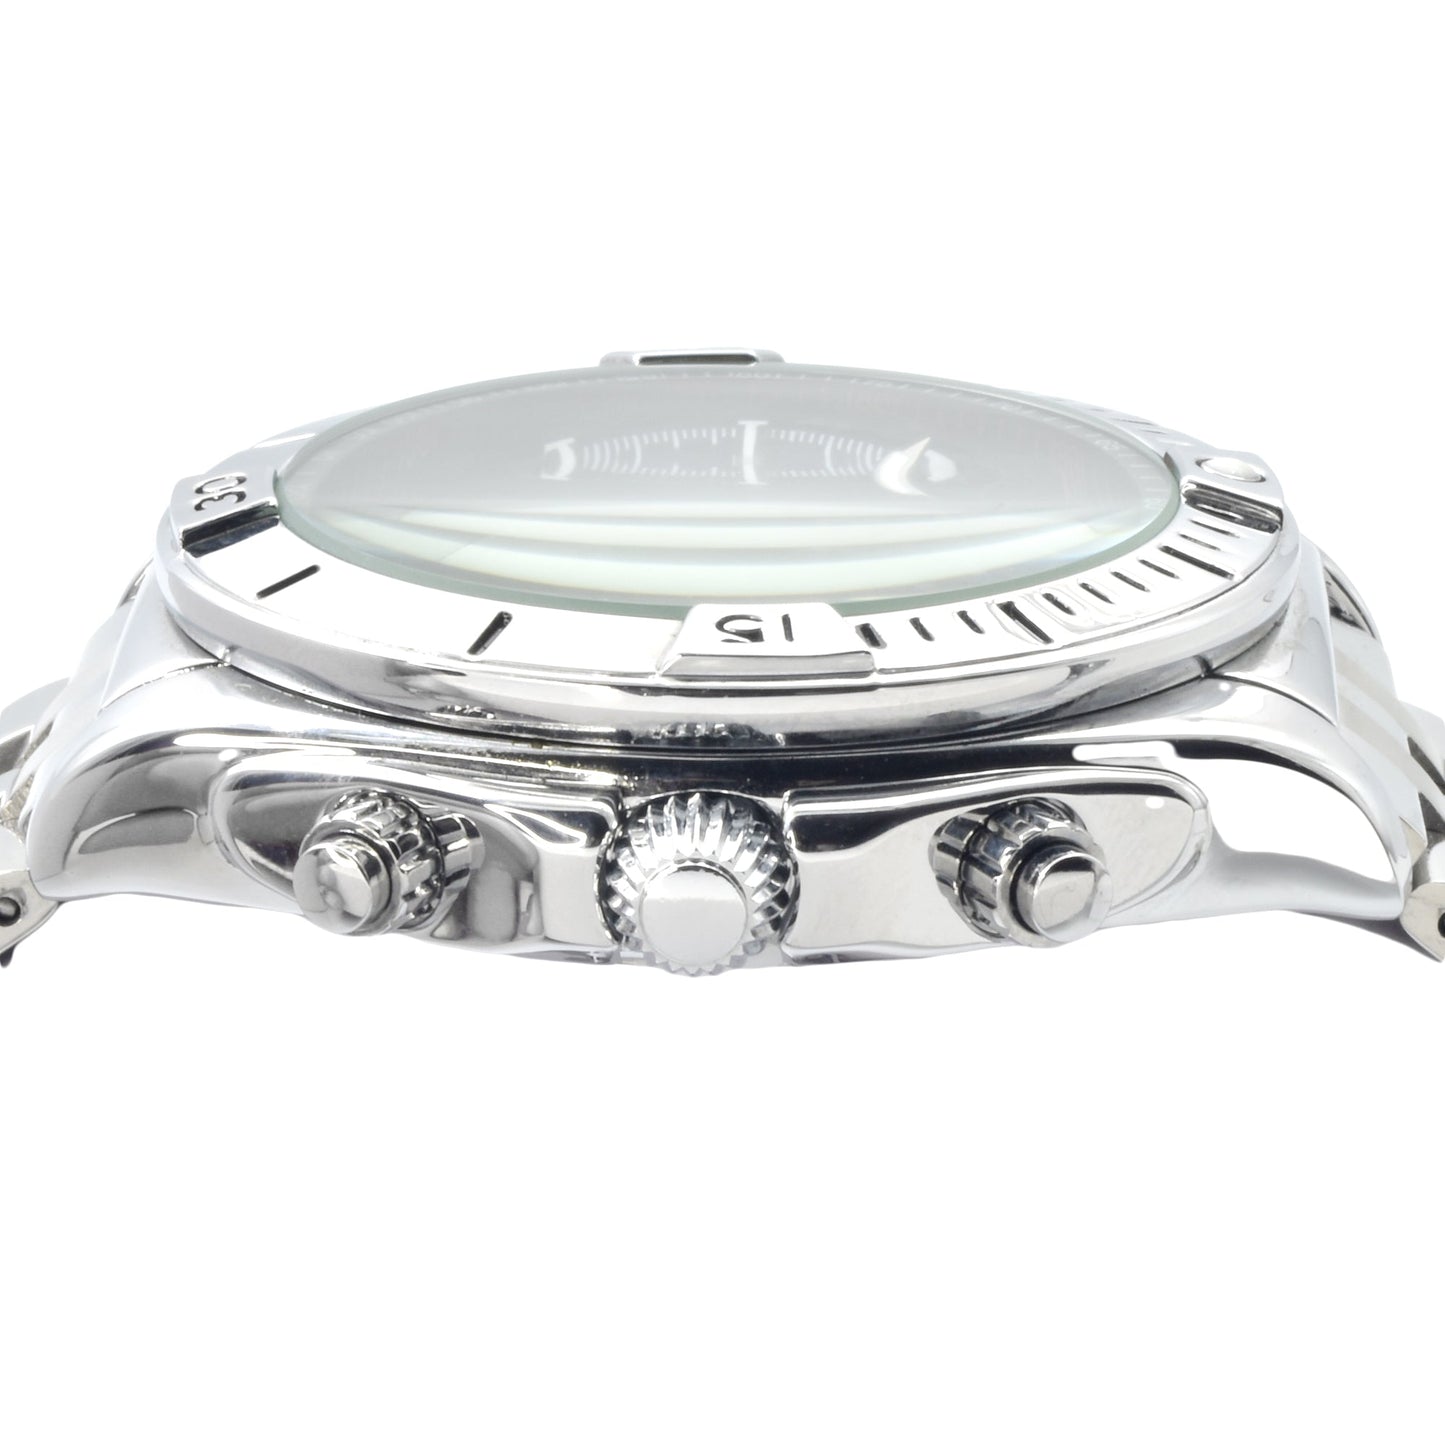 BREITLING Premium Quality AA Chronograph Quartz Watch | BRTLING Watch C1003